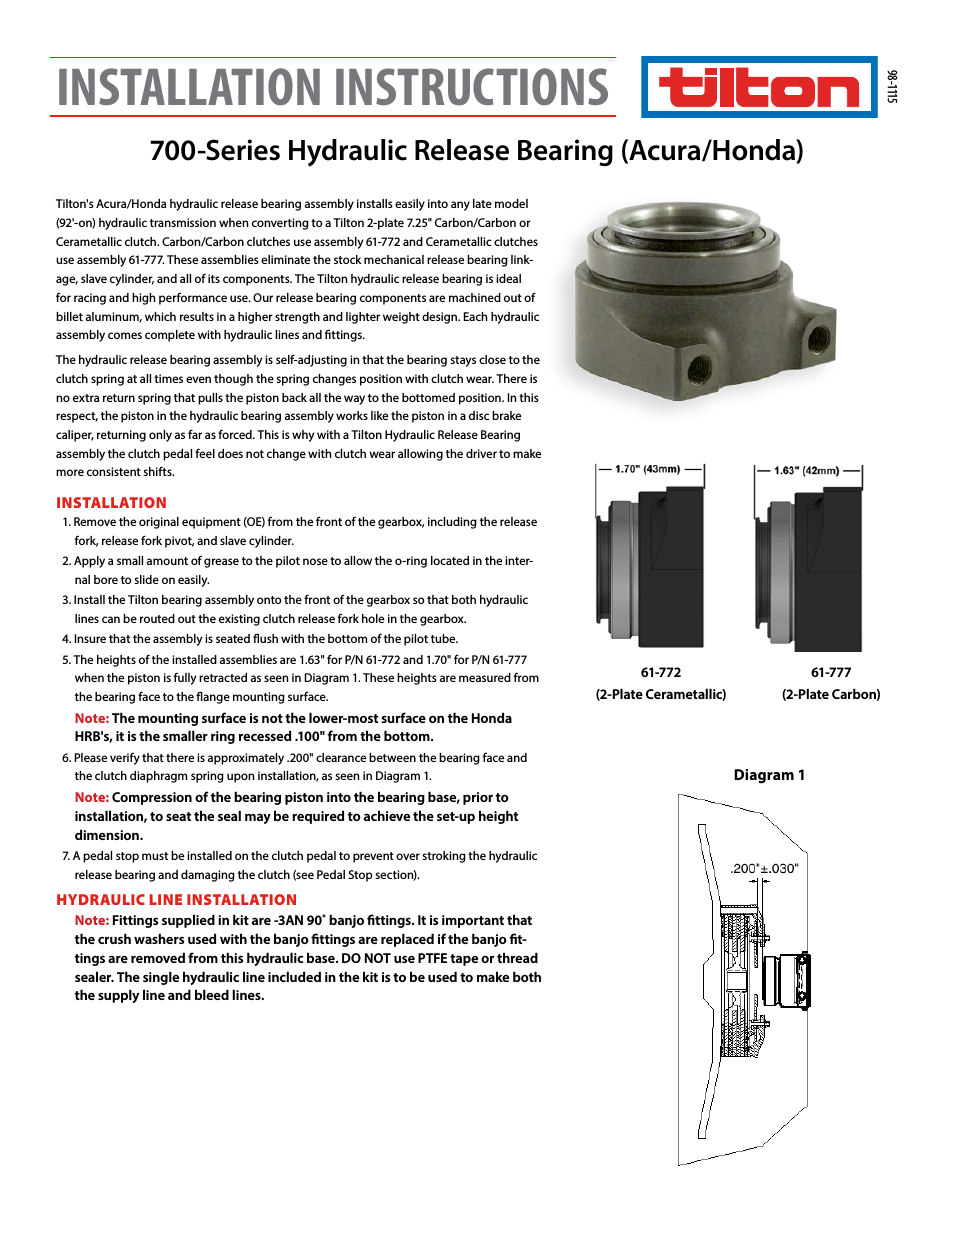 700-Series Hydraulic Release Bearing (98-1115)